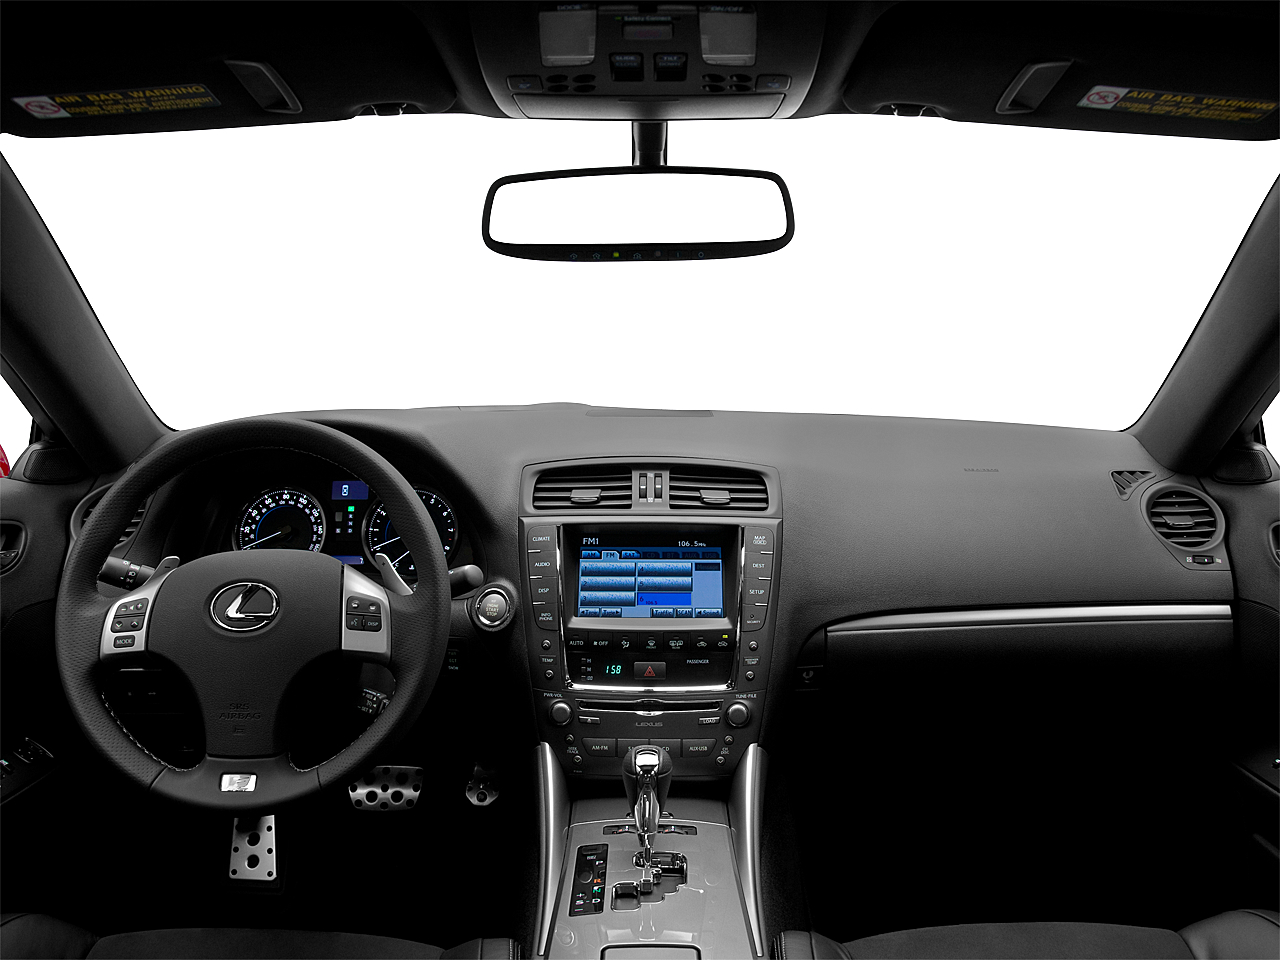 2011 Lexus IS 250 4dr Sedan 6A - Research - GrooveCar